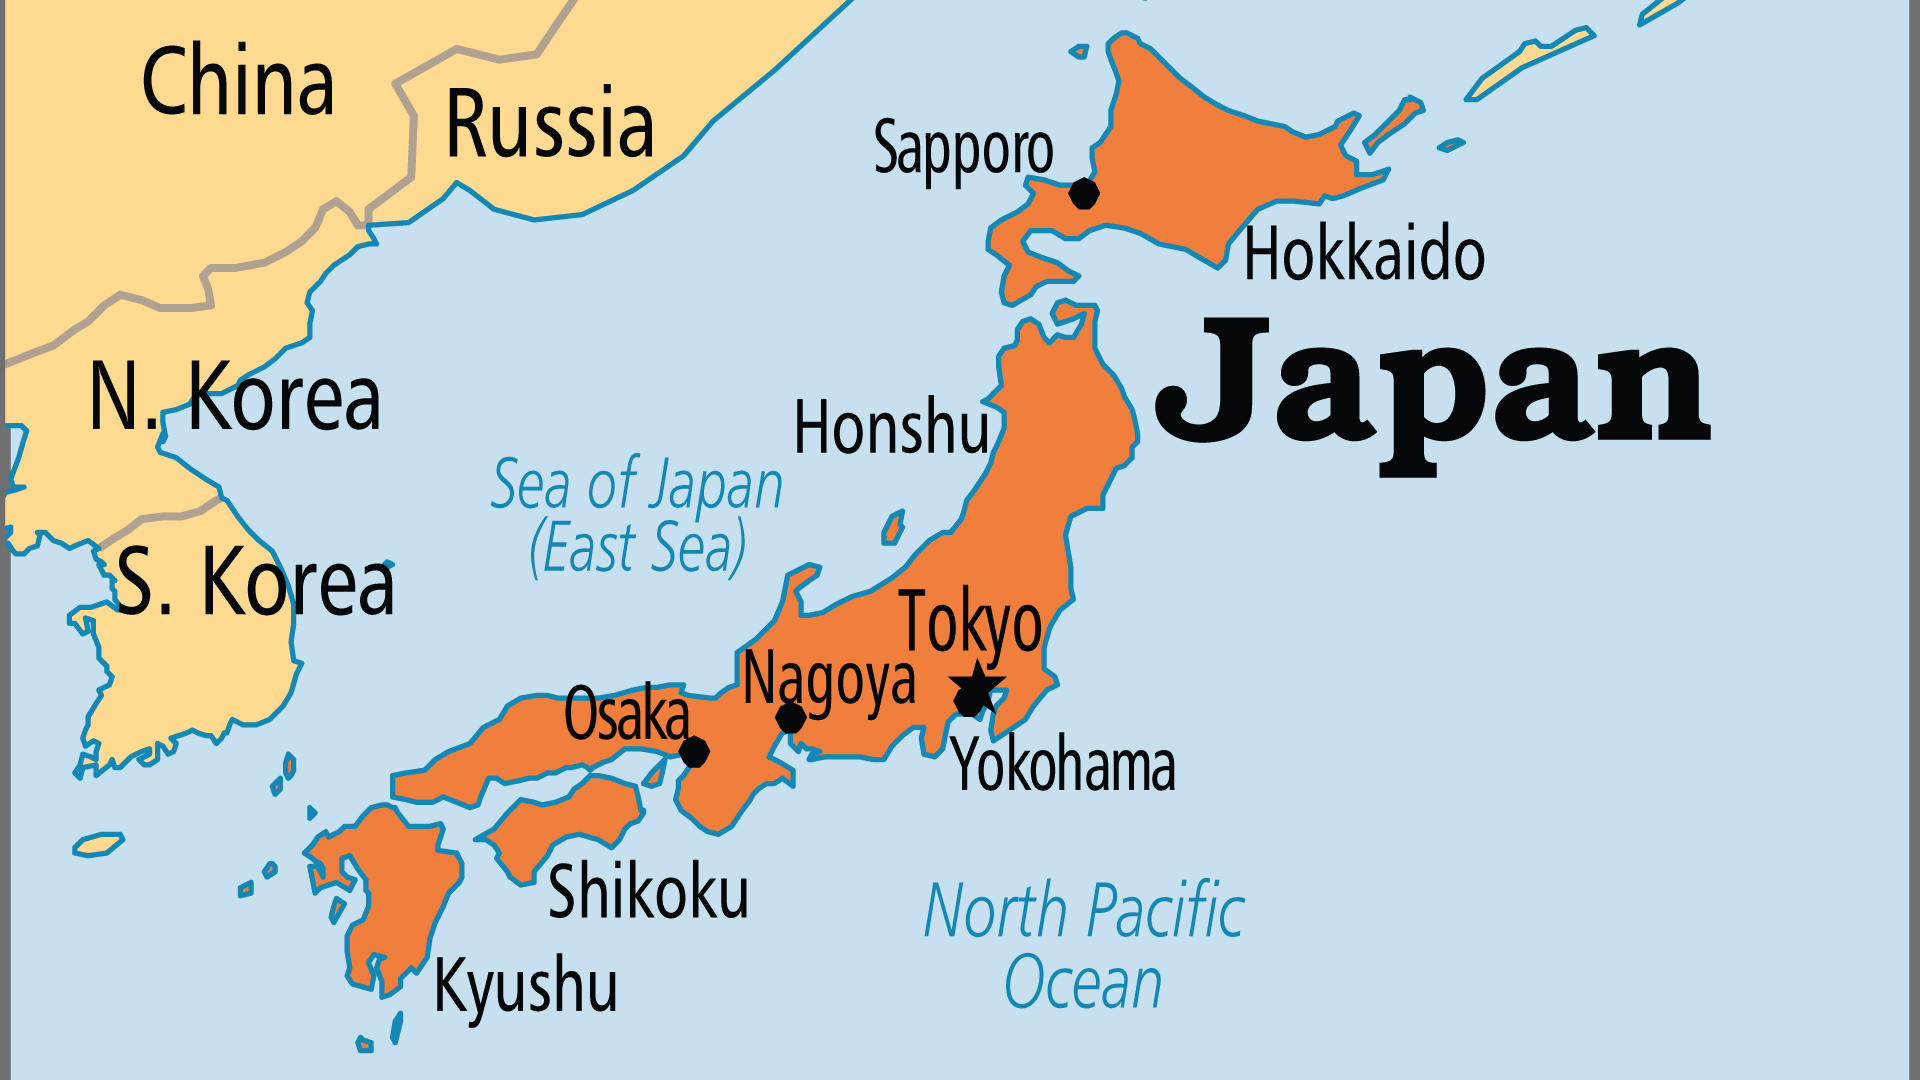 Japan (Operation World)